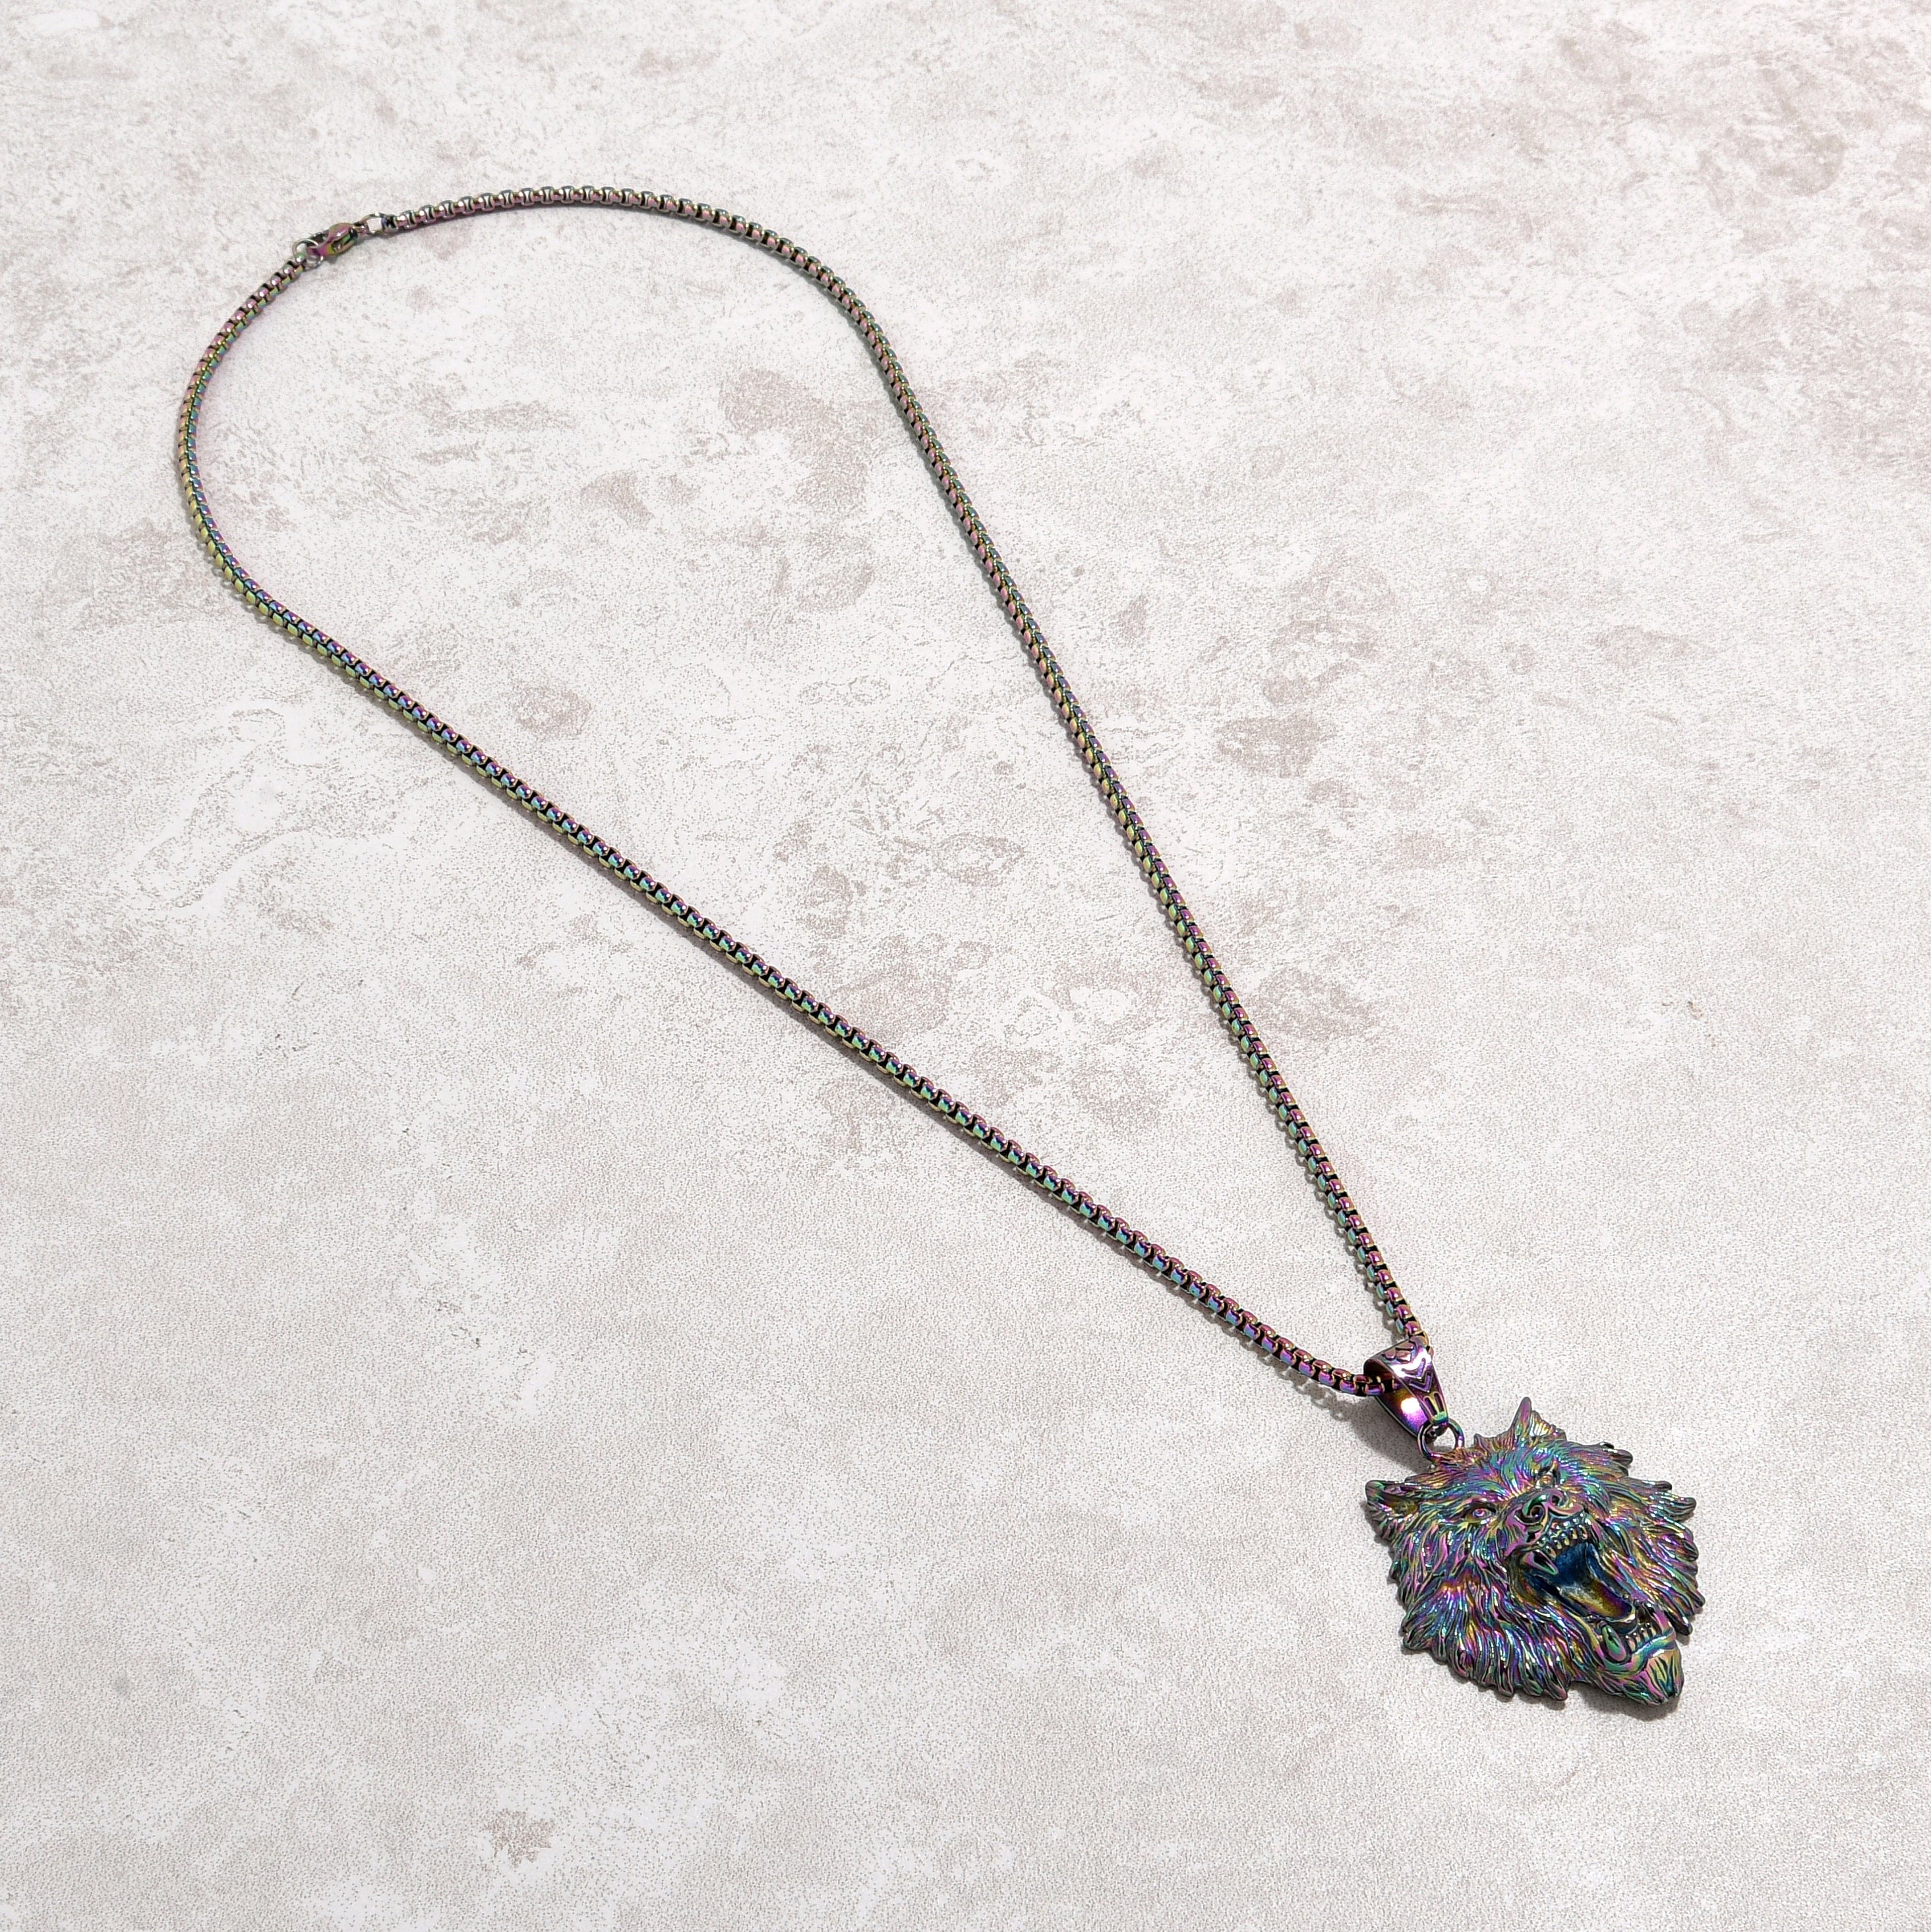 Kalifano Steel Hearts Jewelry Aurora Borealis Wolf Steel Hearts Necklace SHN528-AB